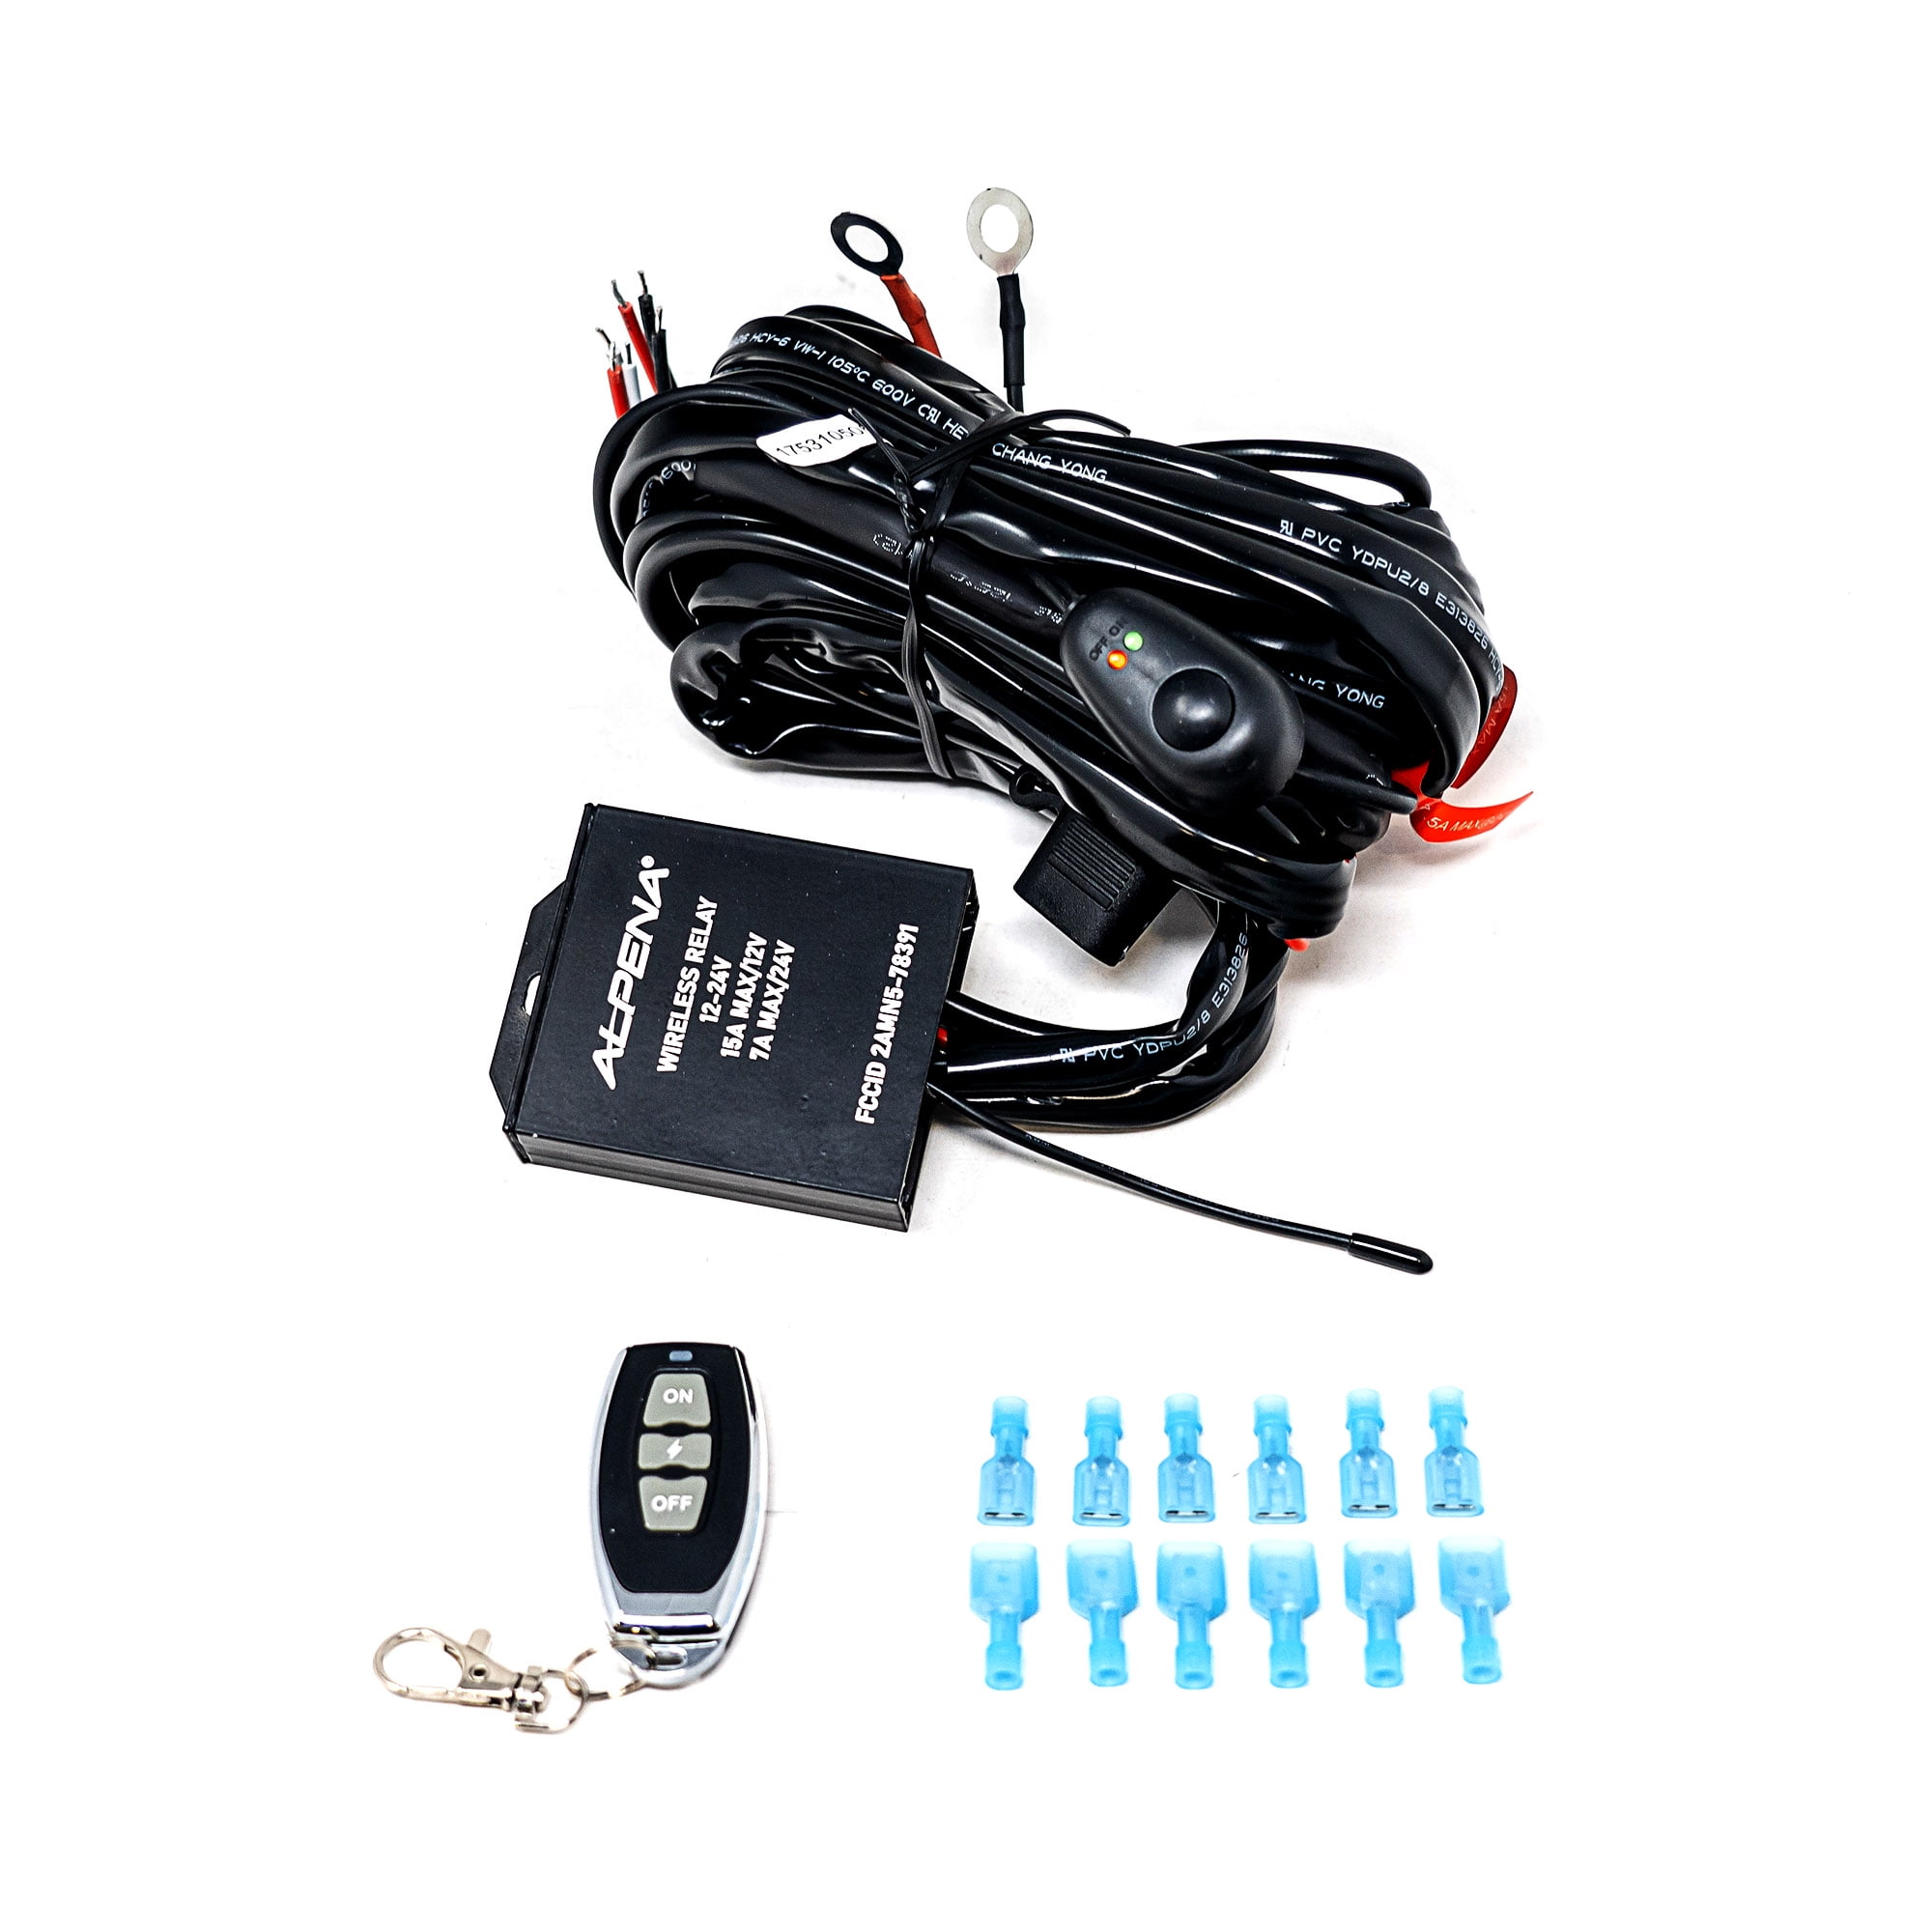 Alpena Wireless Install Kit Powers 2 Lights, Model 78391